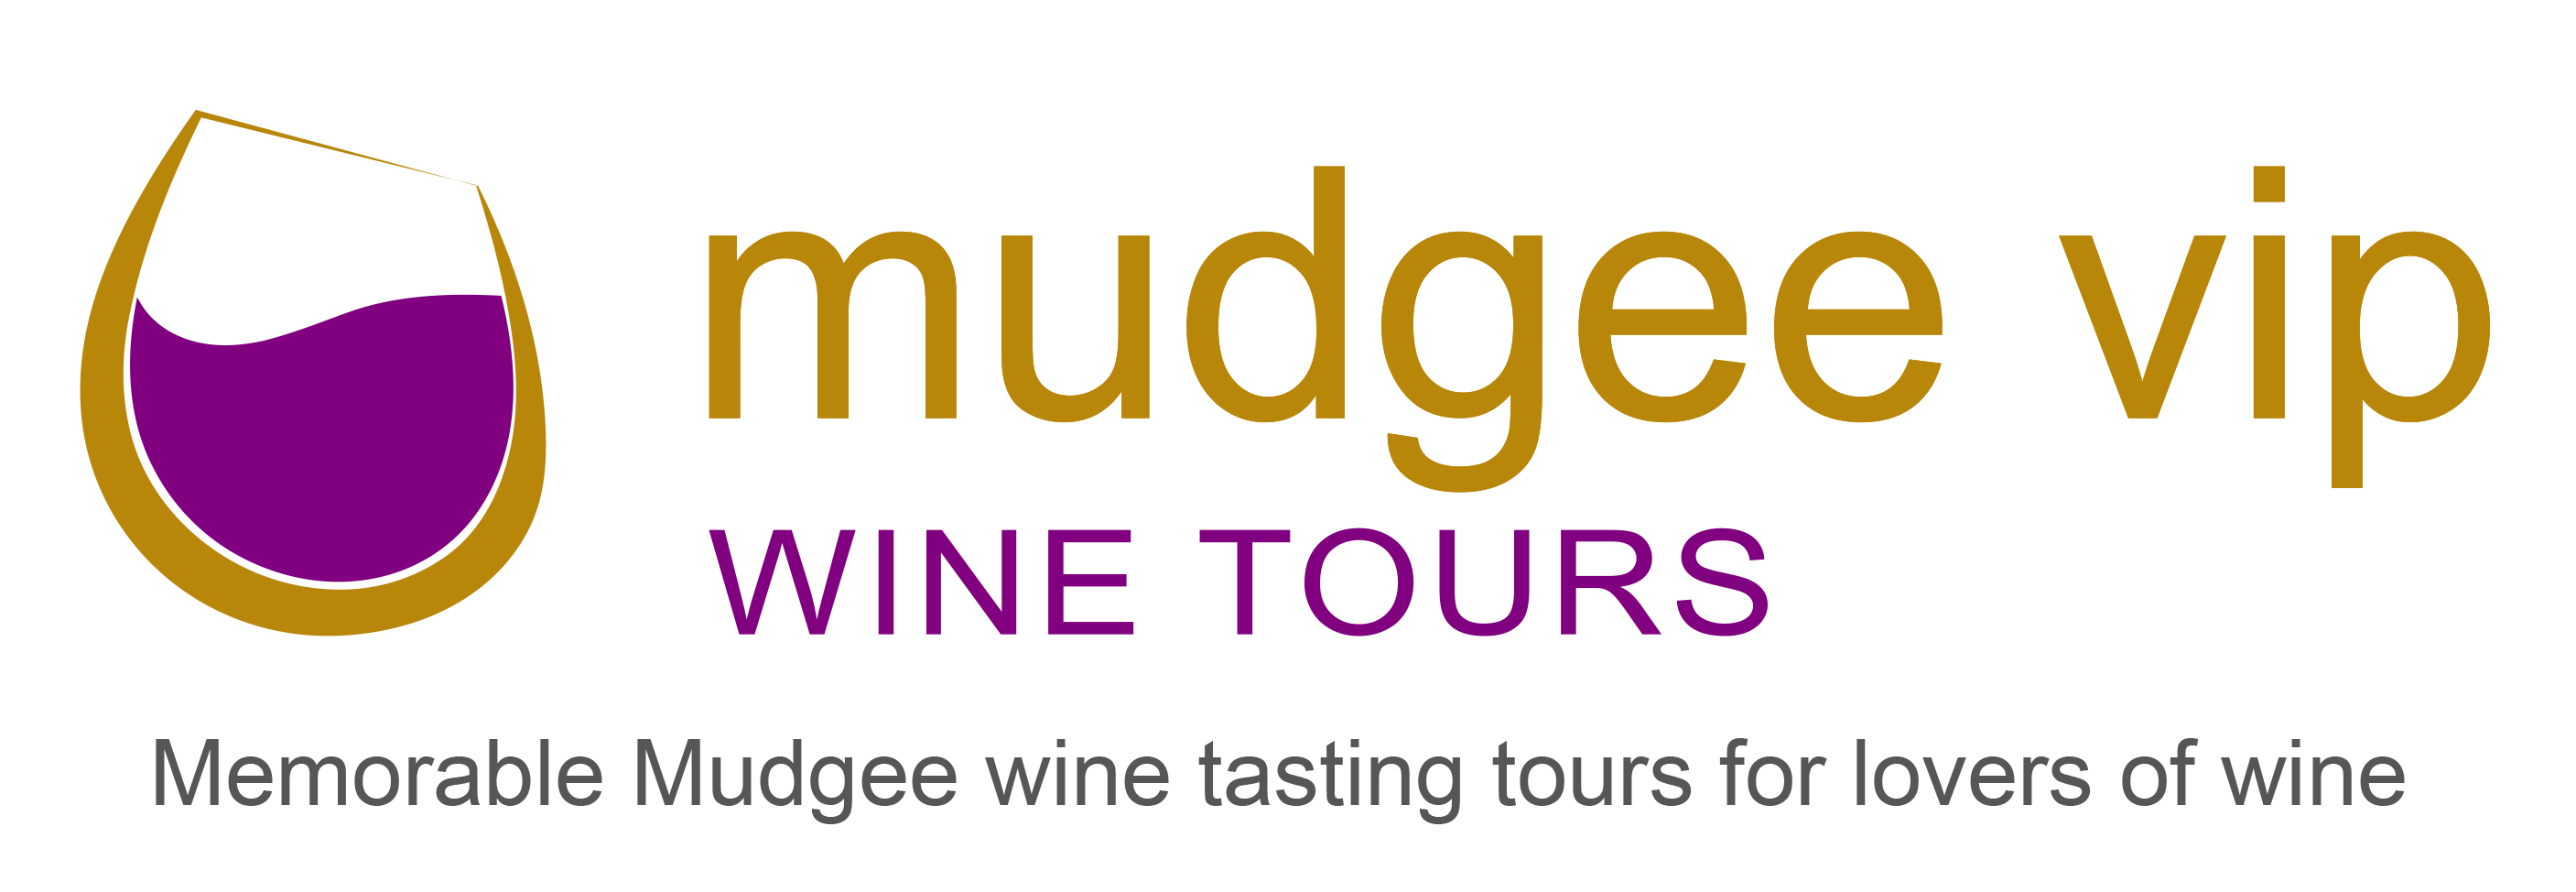 Mudgee VIP Wine Tours logo